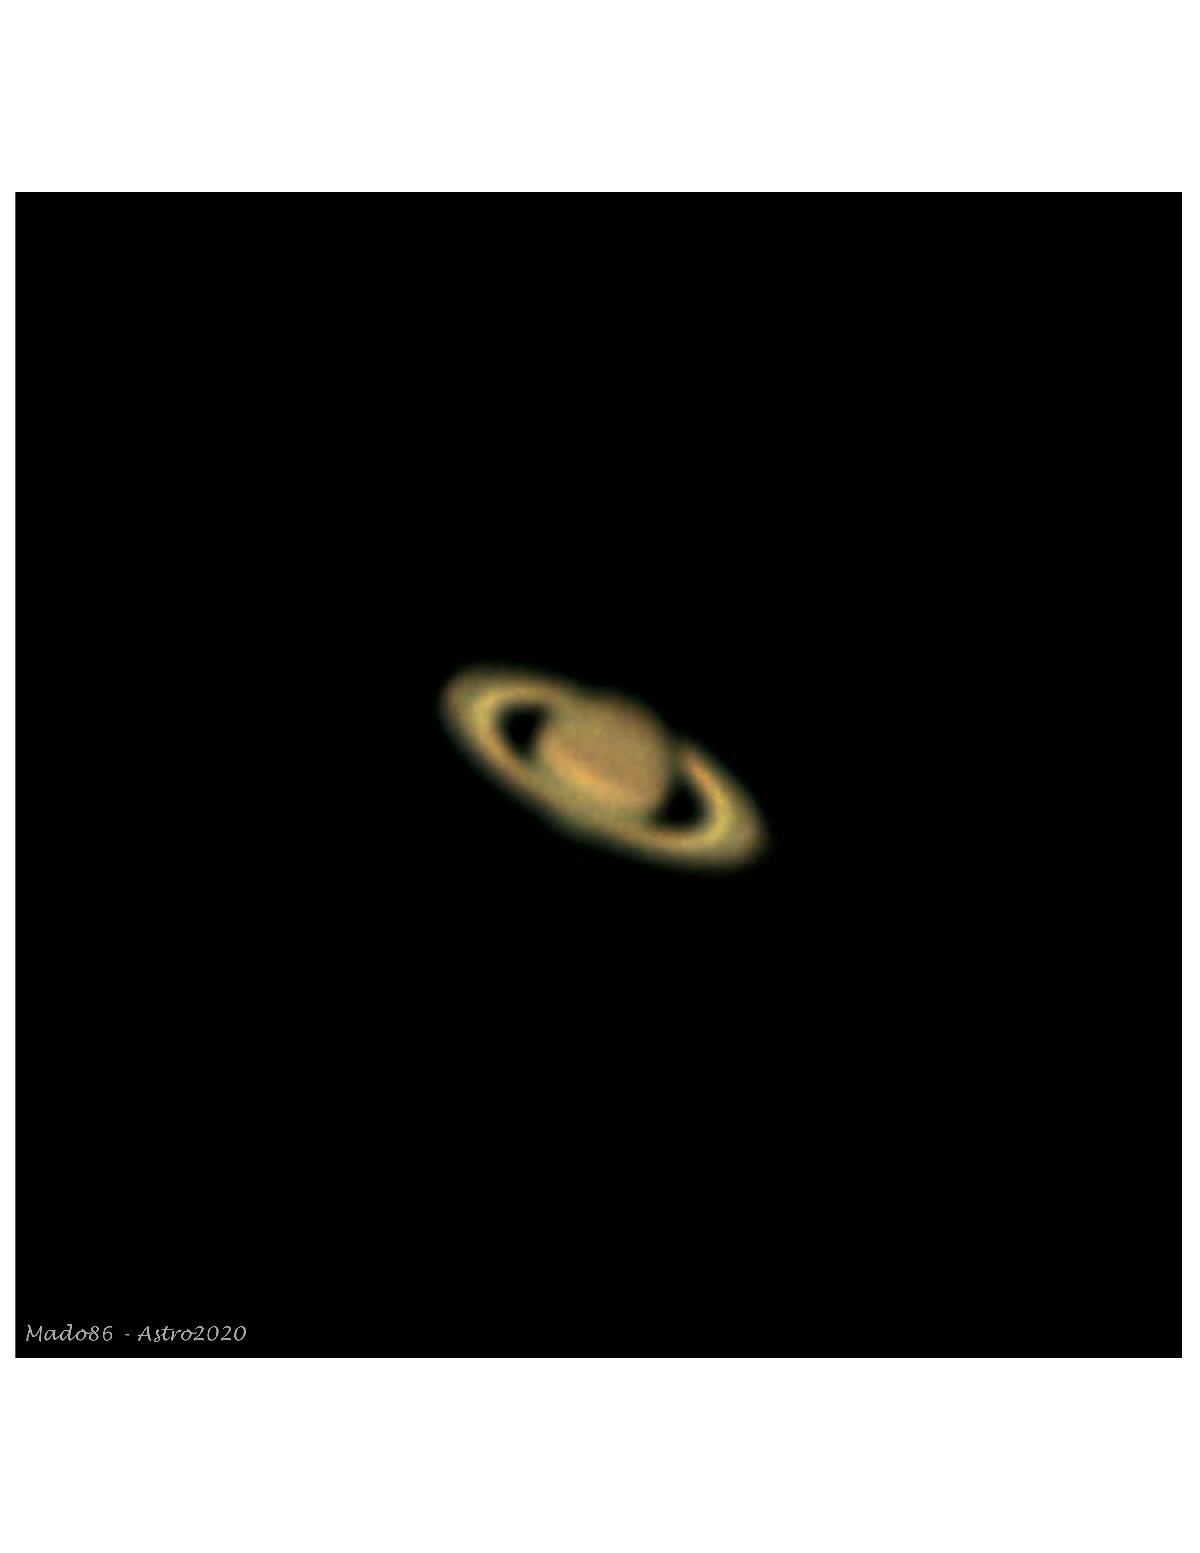 Saturne le 30 05 2020